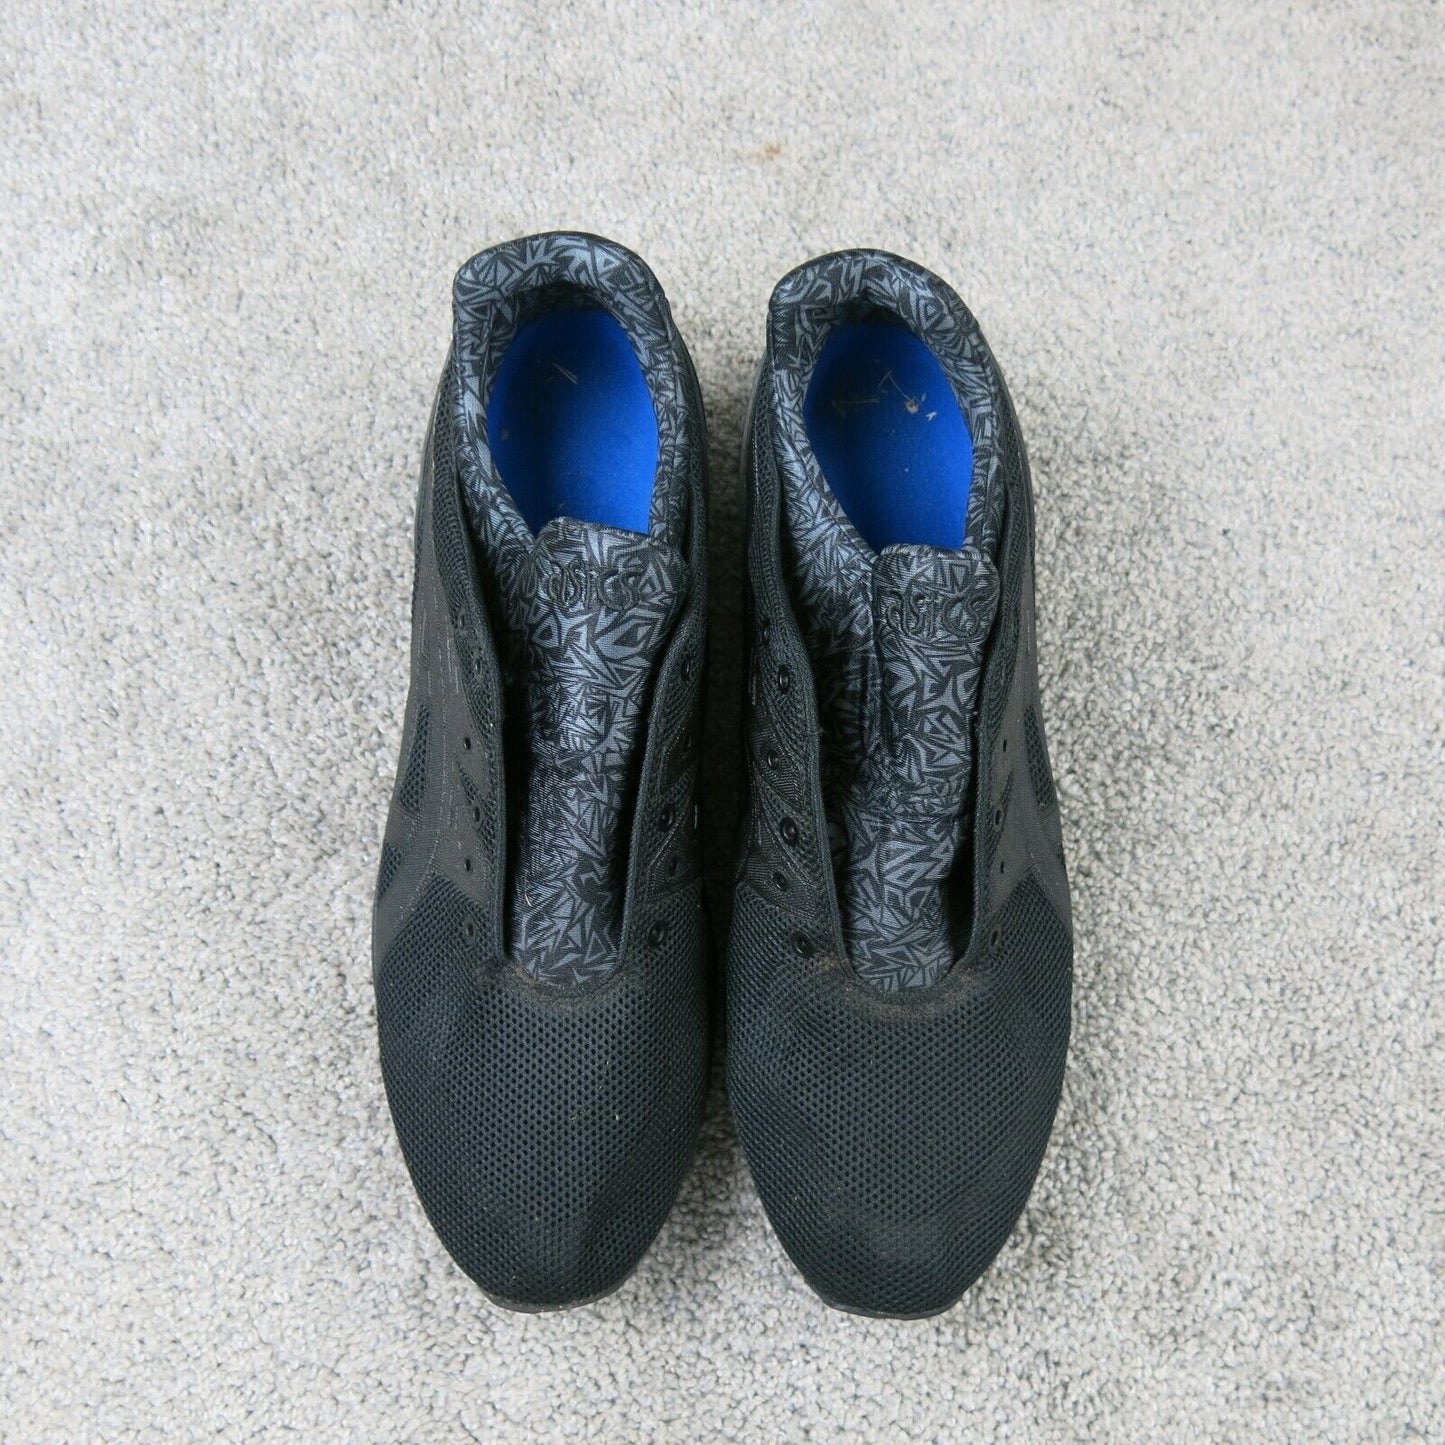 Asics Men's Gel-Kayano H51ZDQ Black Trainer Athletic Sneaker Shoes Size US 10.5